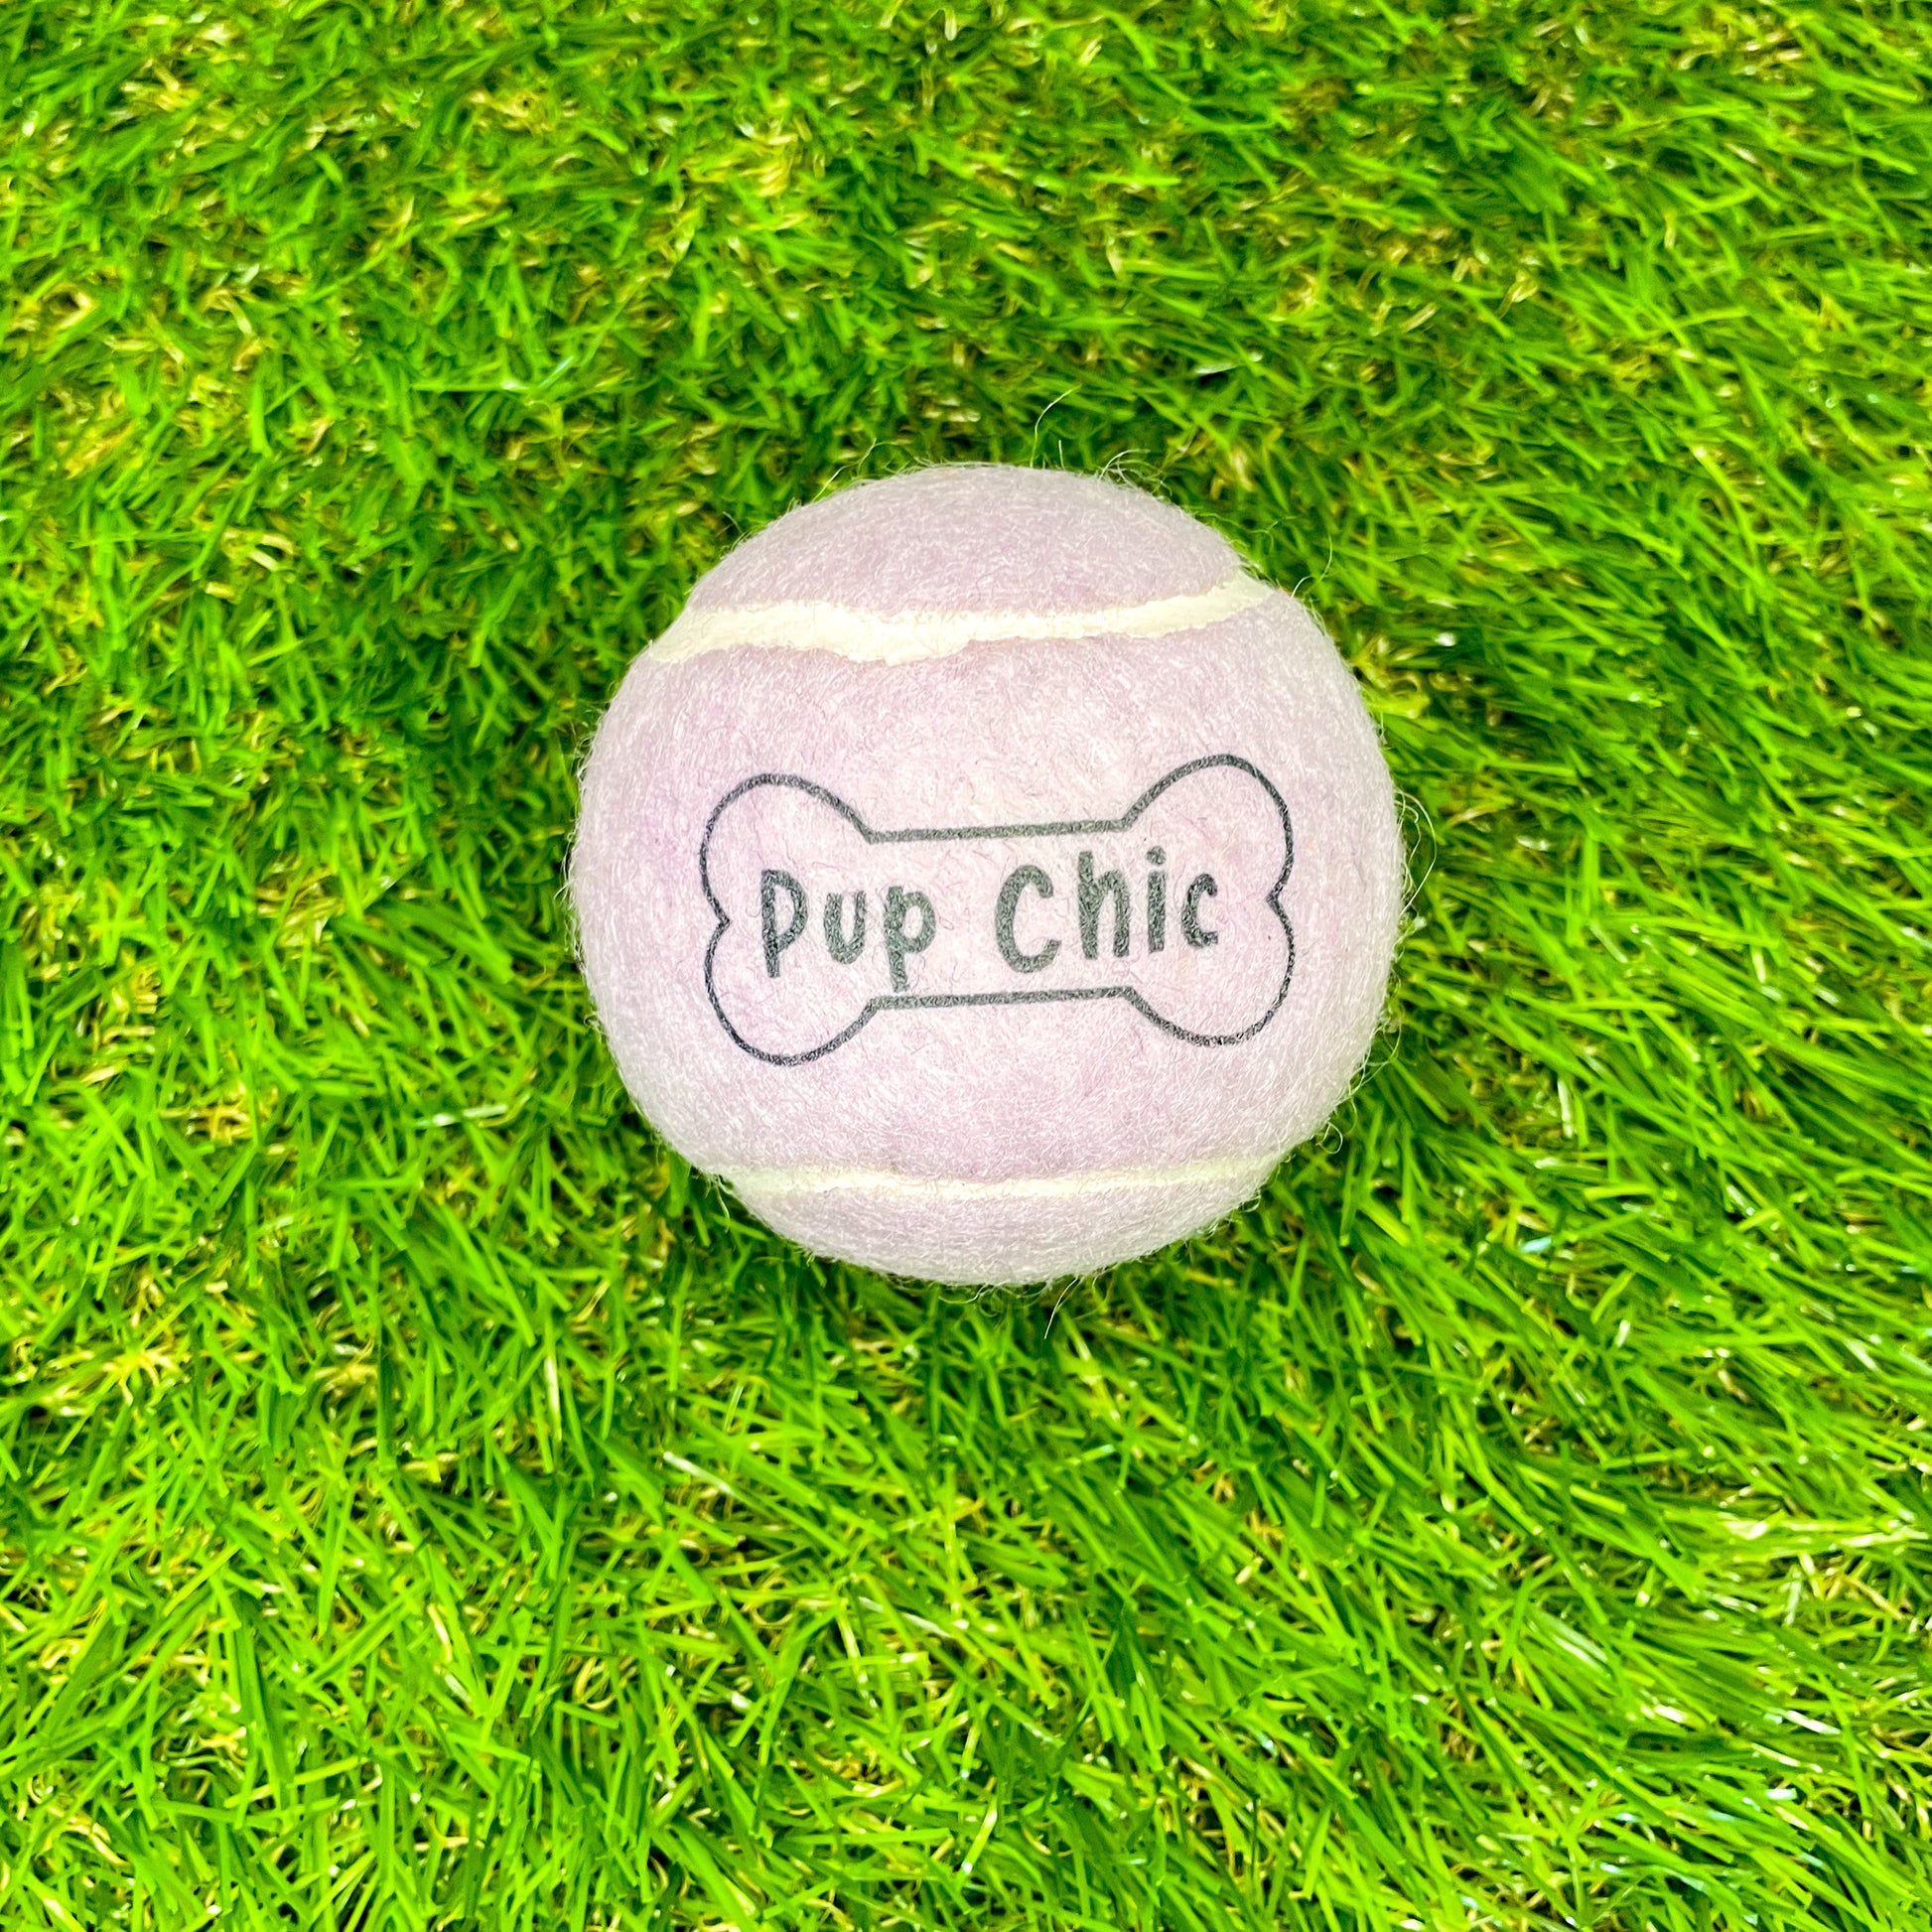 chic ball - standard size tennis ball pastel lilac